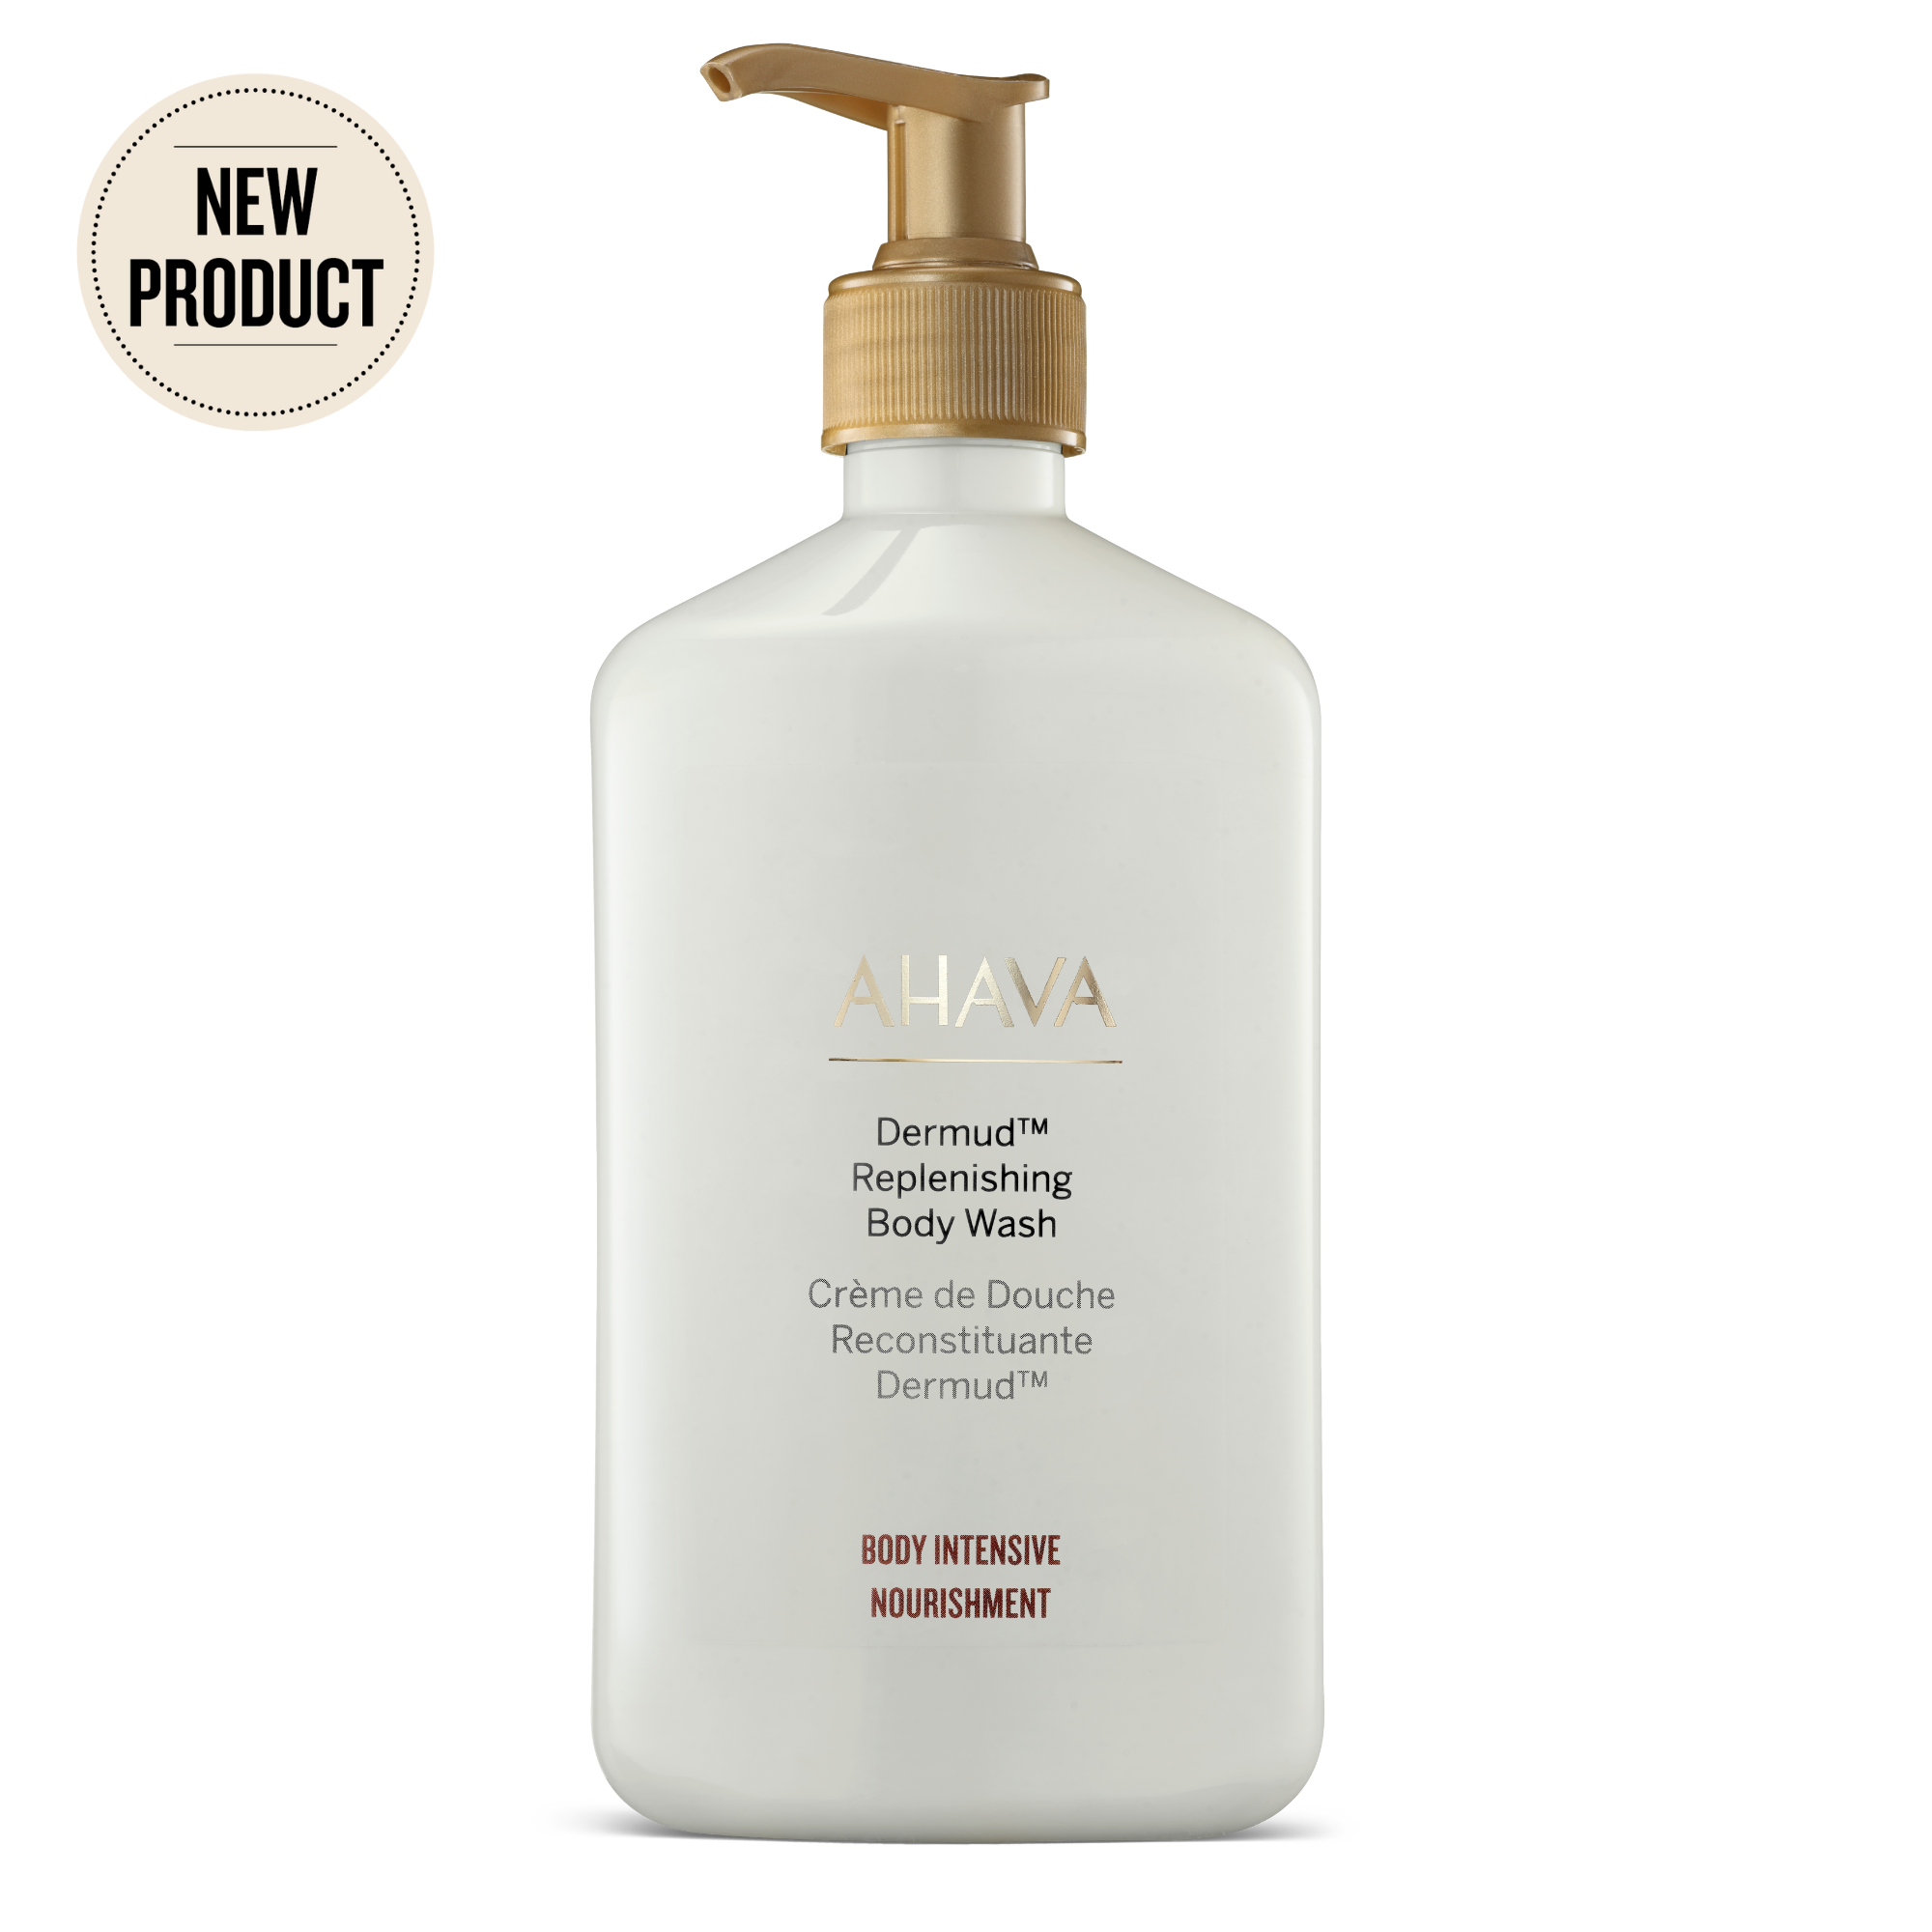 AHAVA® Dermud – USA Nourishing AHAVA Body Cream